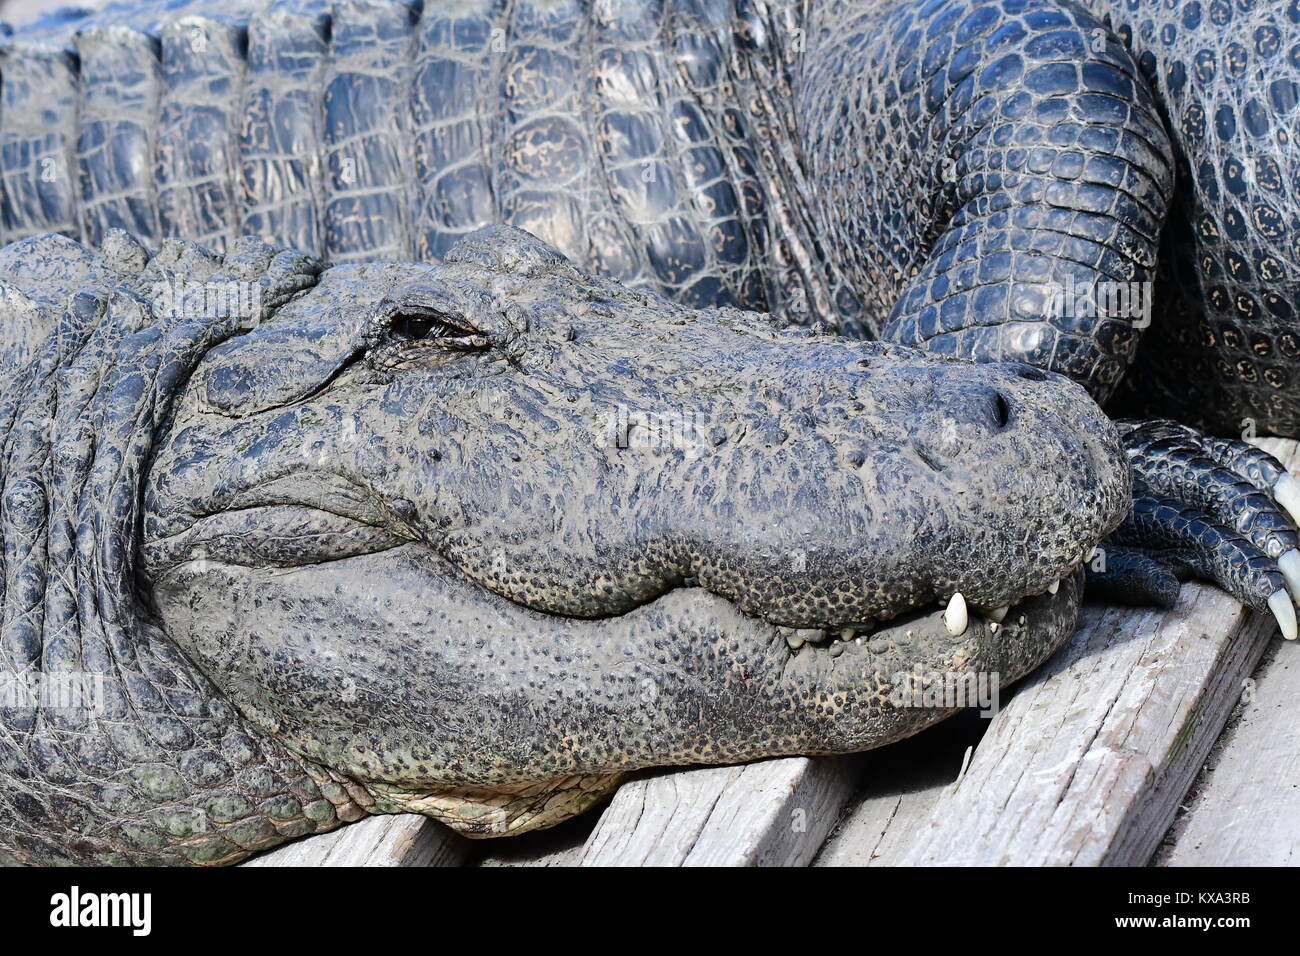 Lächelnd Alligator Stockfoto